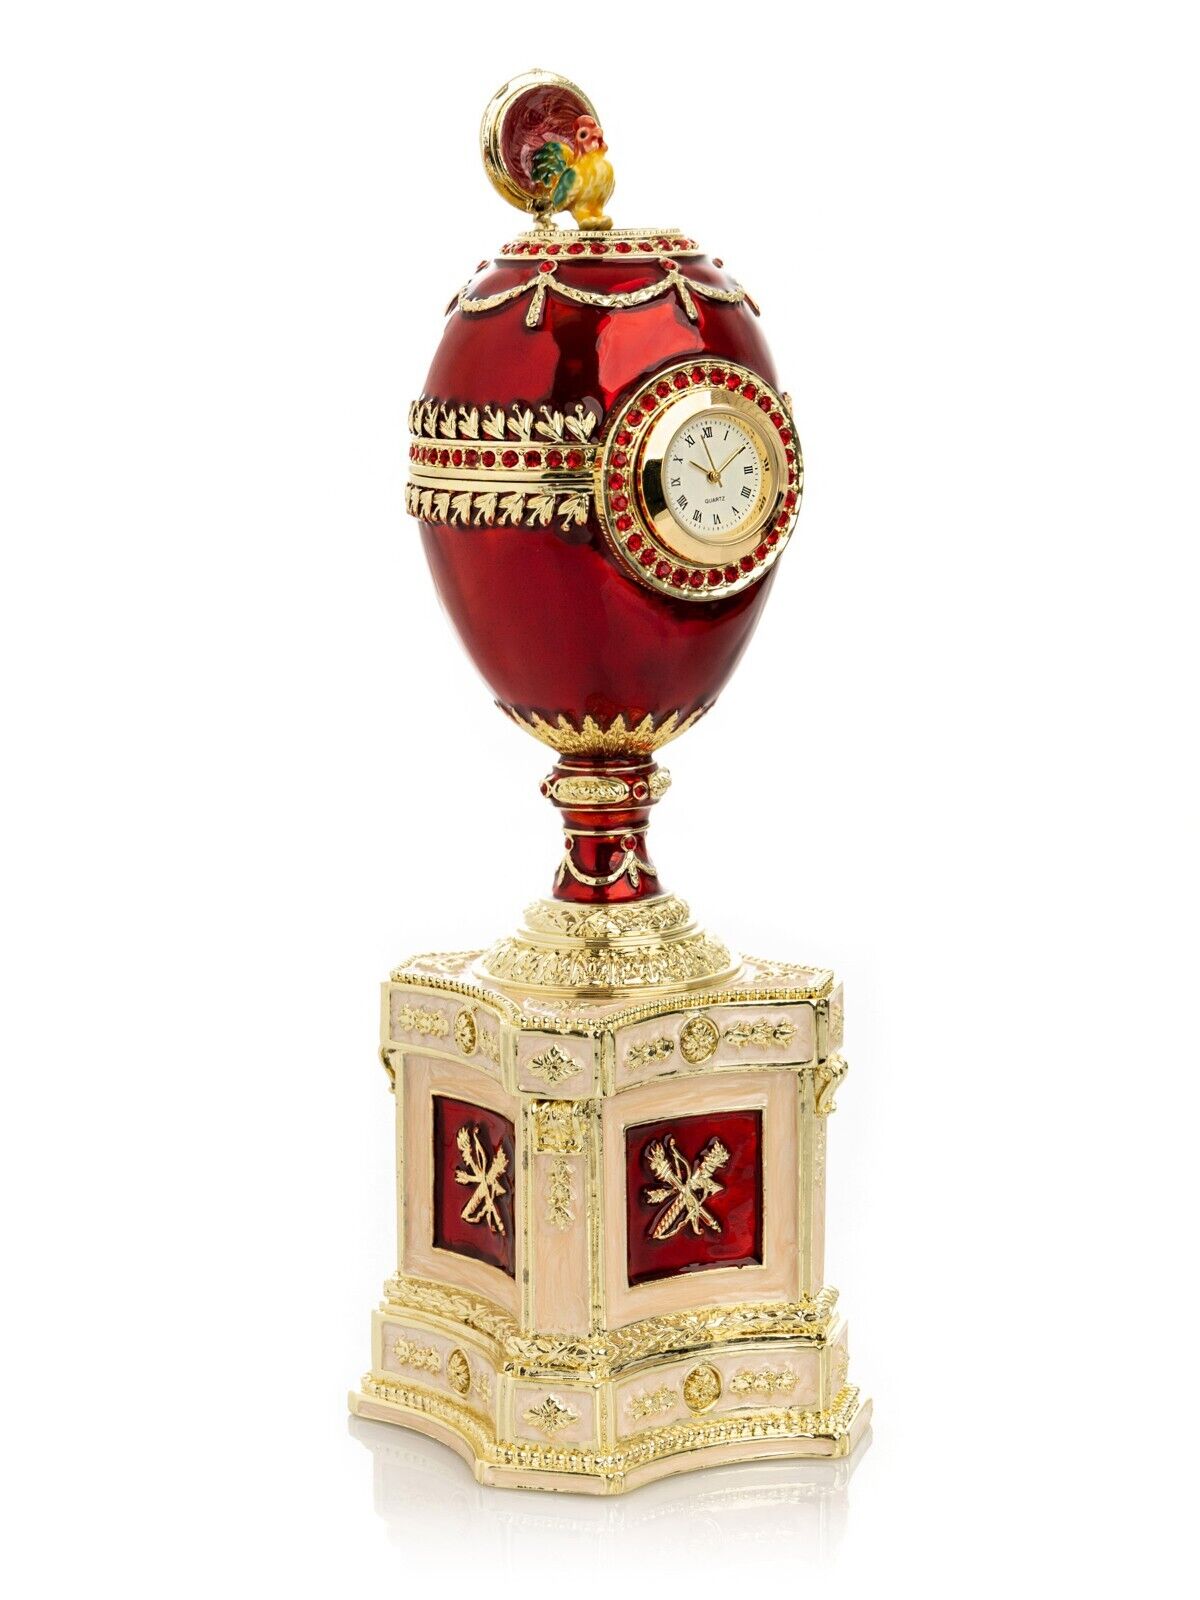 Keren Kopal Red Egg  with clock Trinket Box Handmade with Austrian Crystals